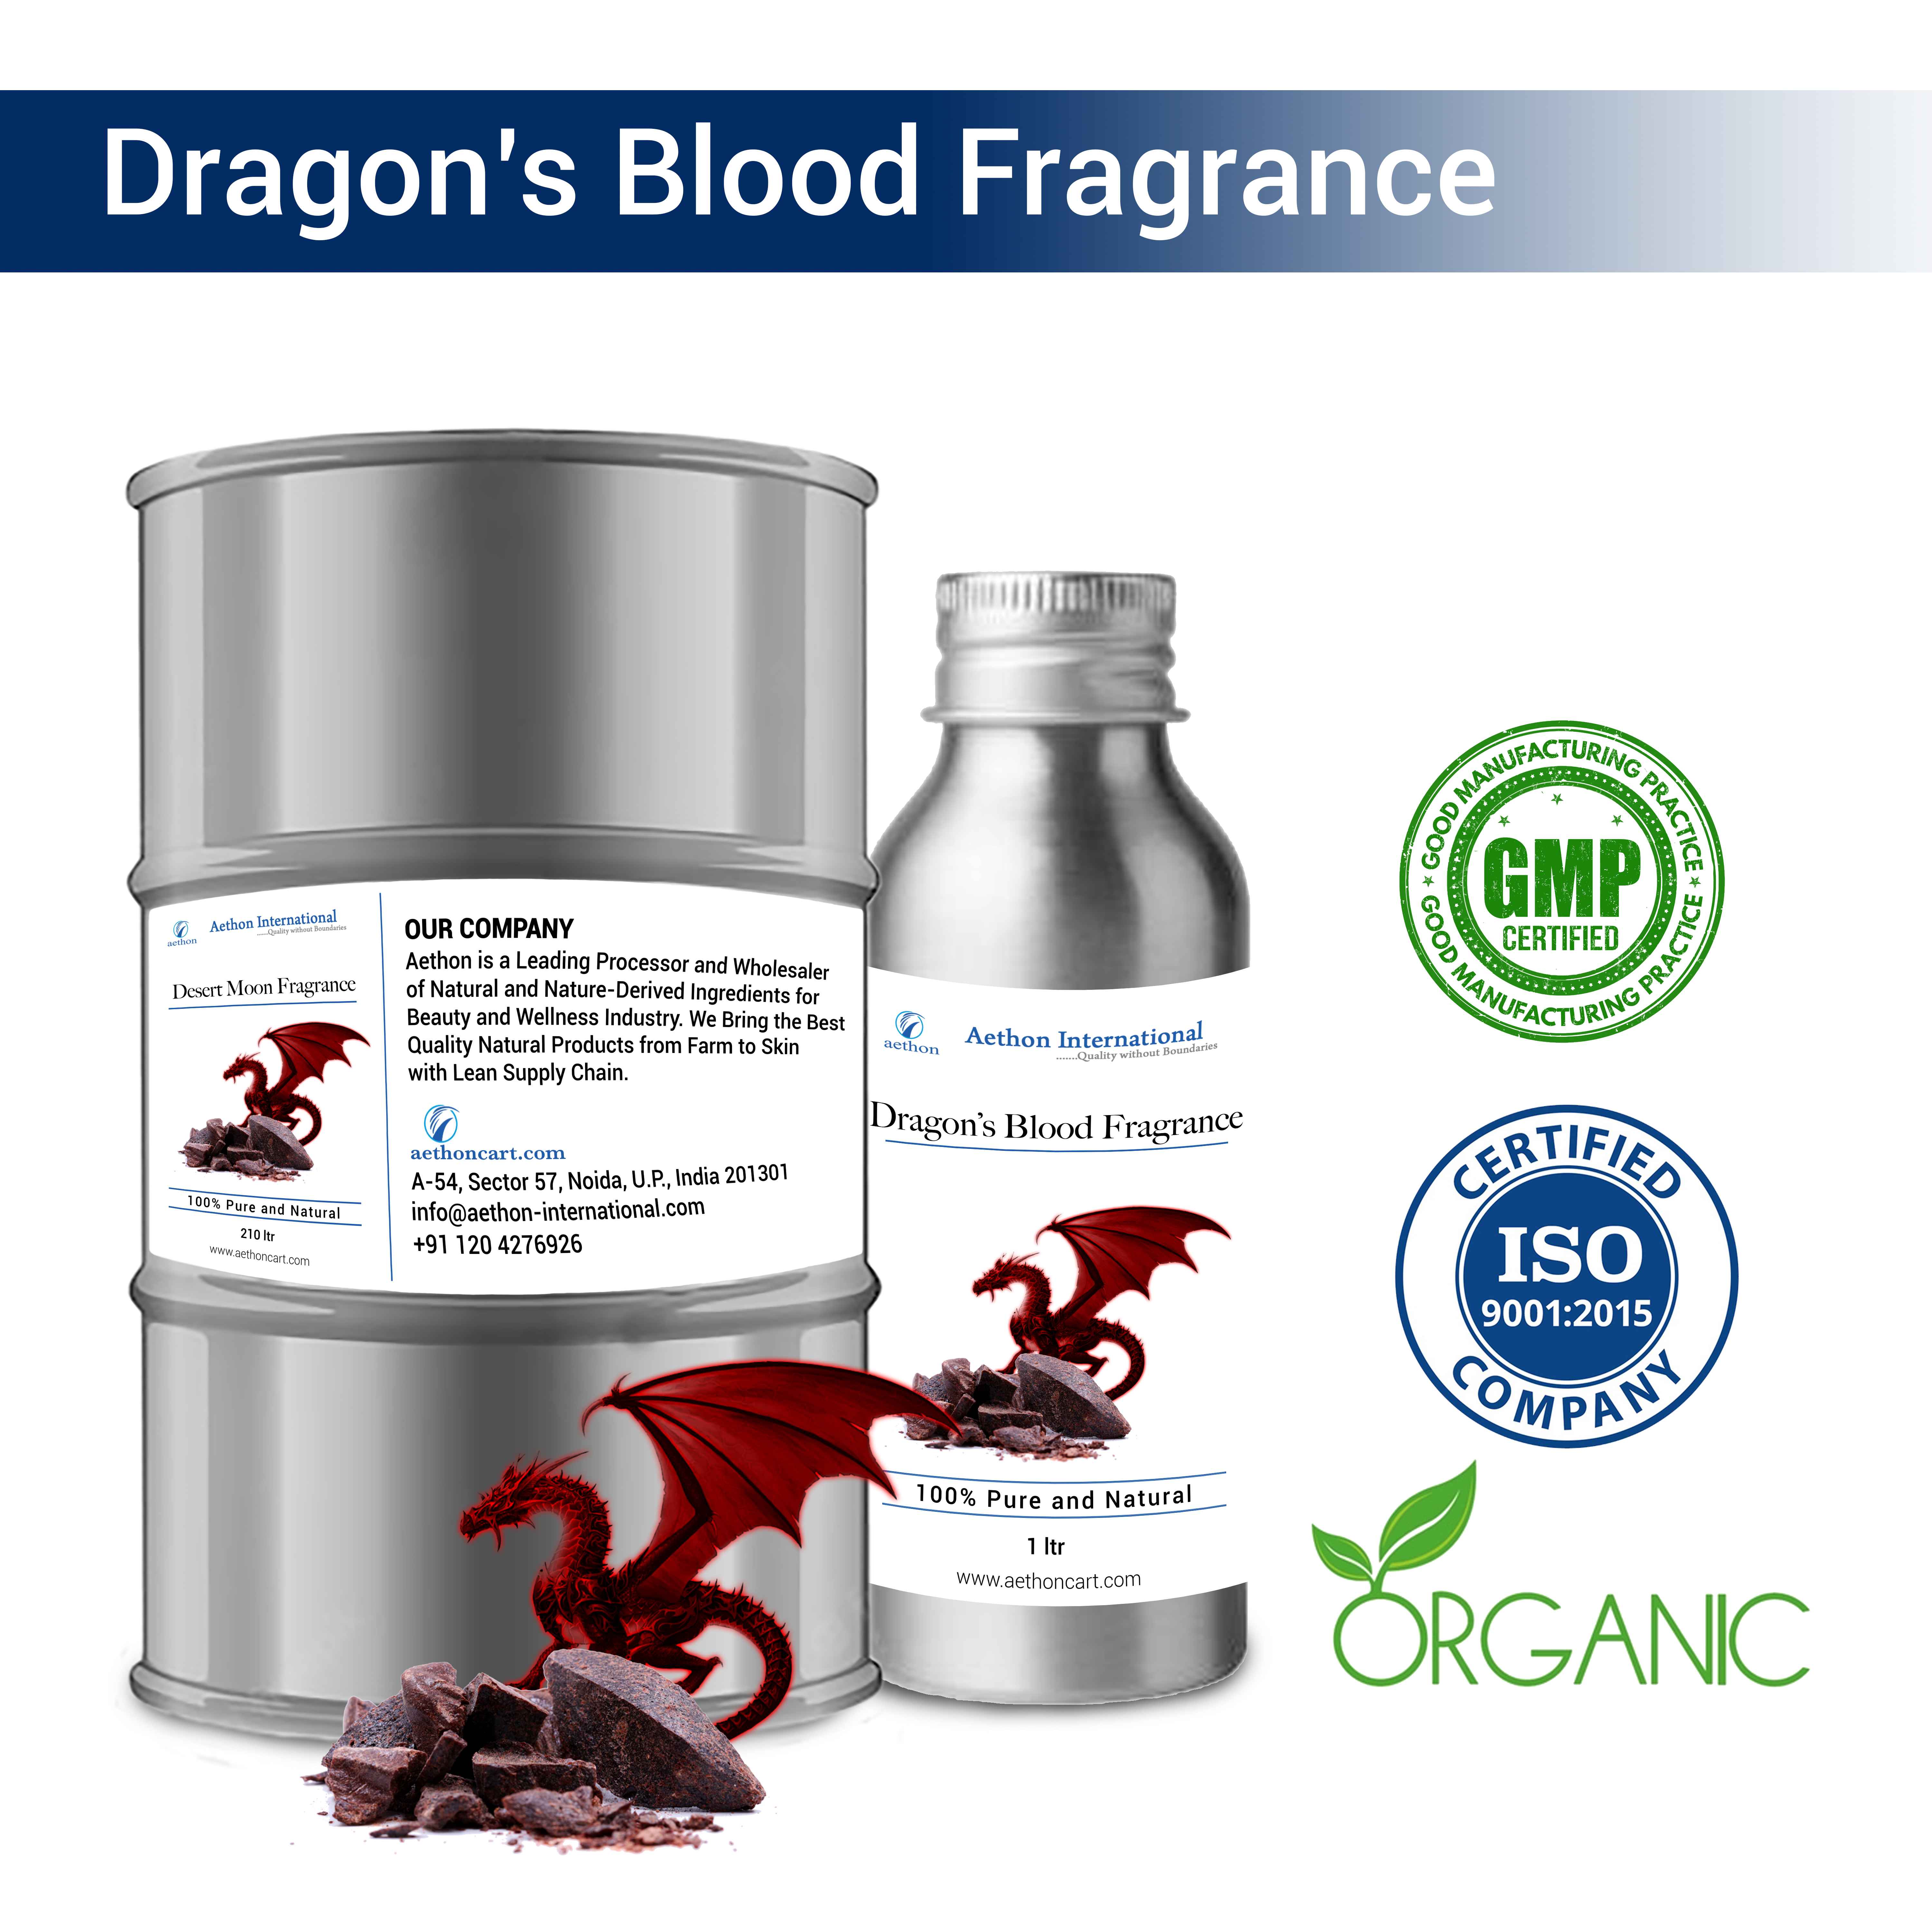 Dragon’s Blood Fragrance